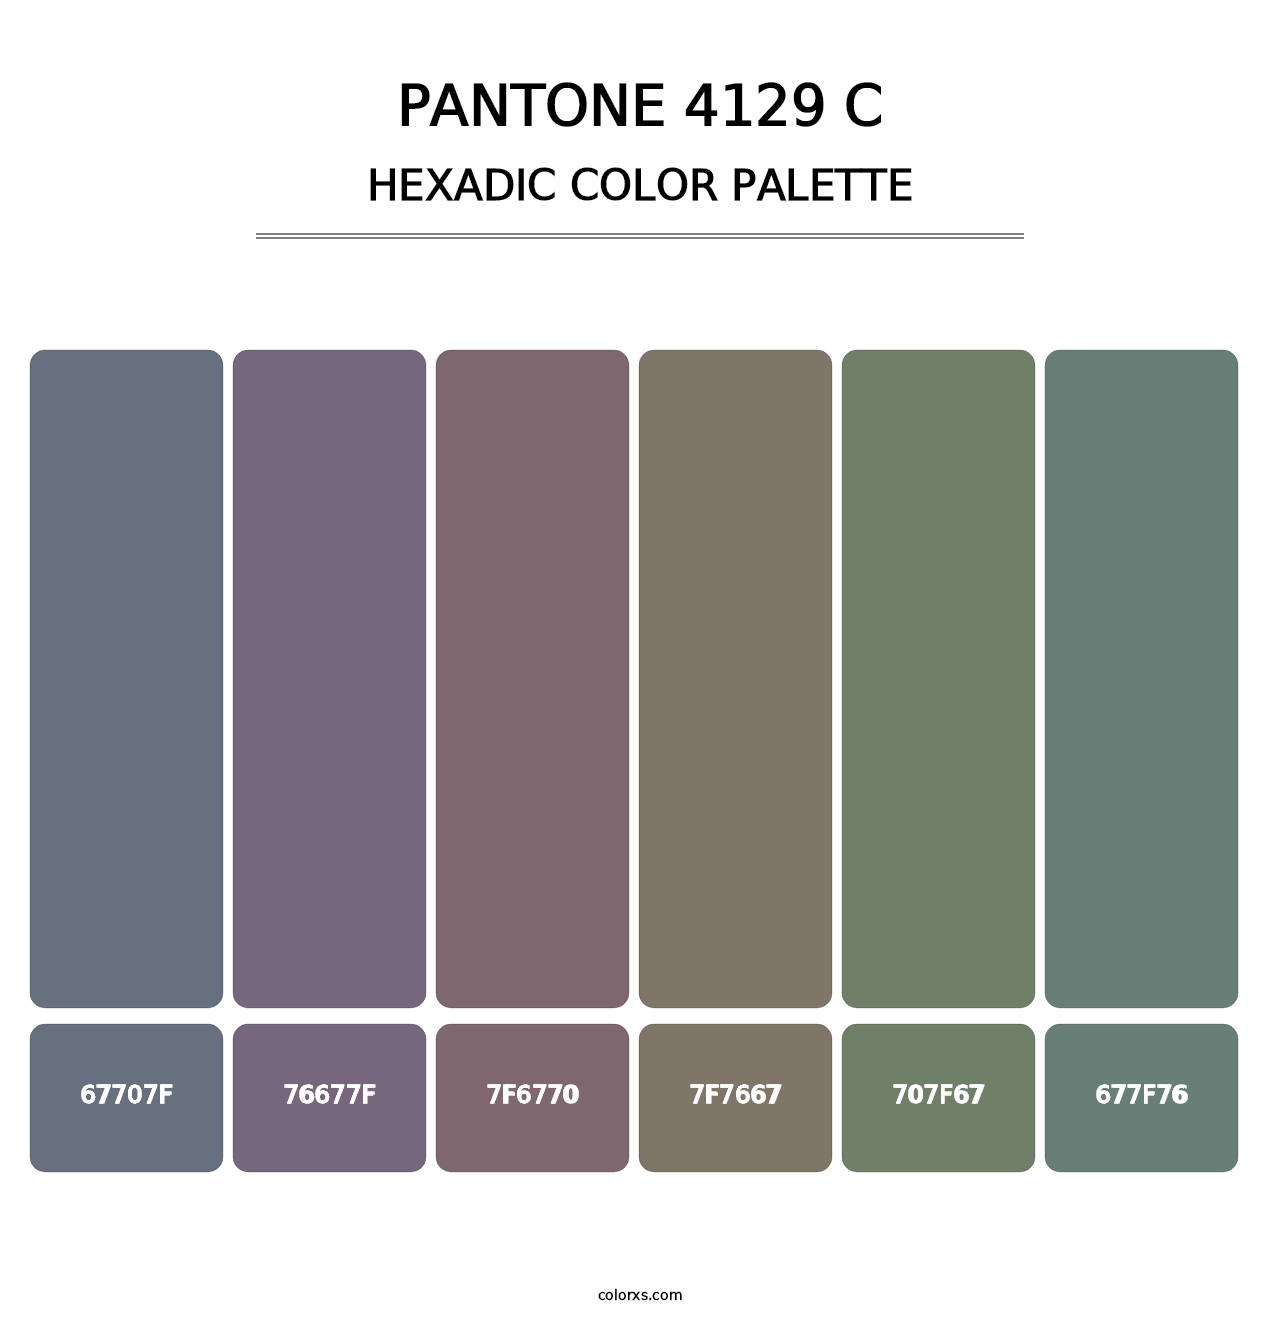 PANTONE 4129 C - Hexadic Color Palette